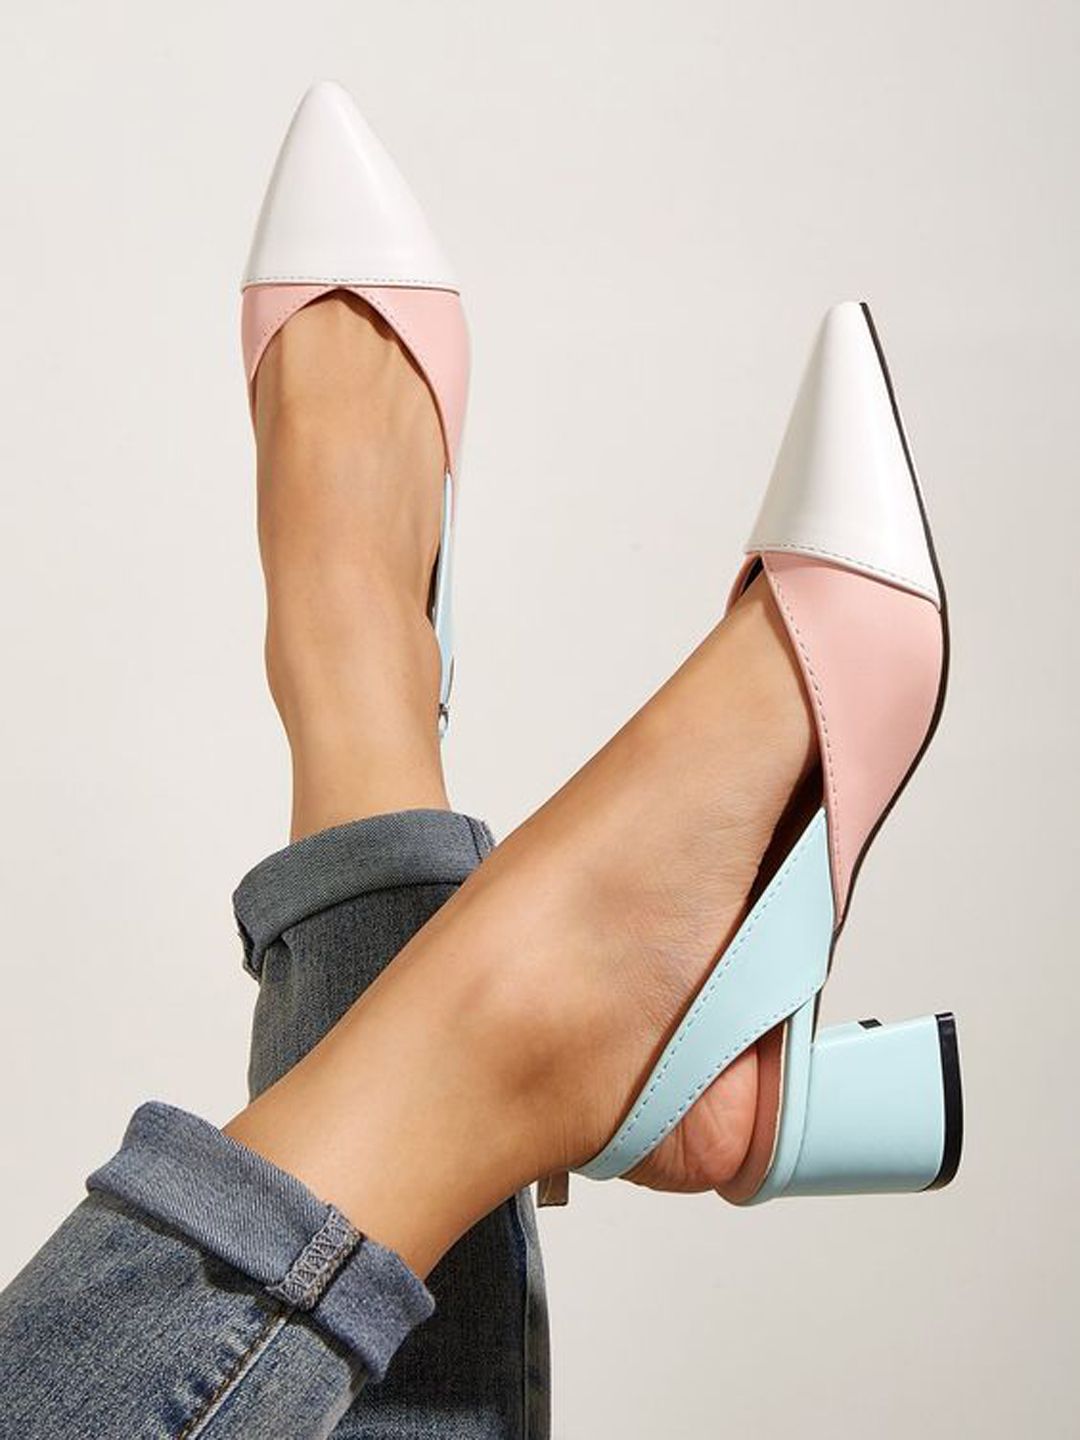     			Shoetopia - Multicolor Women's Pumps Heels